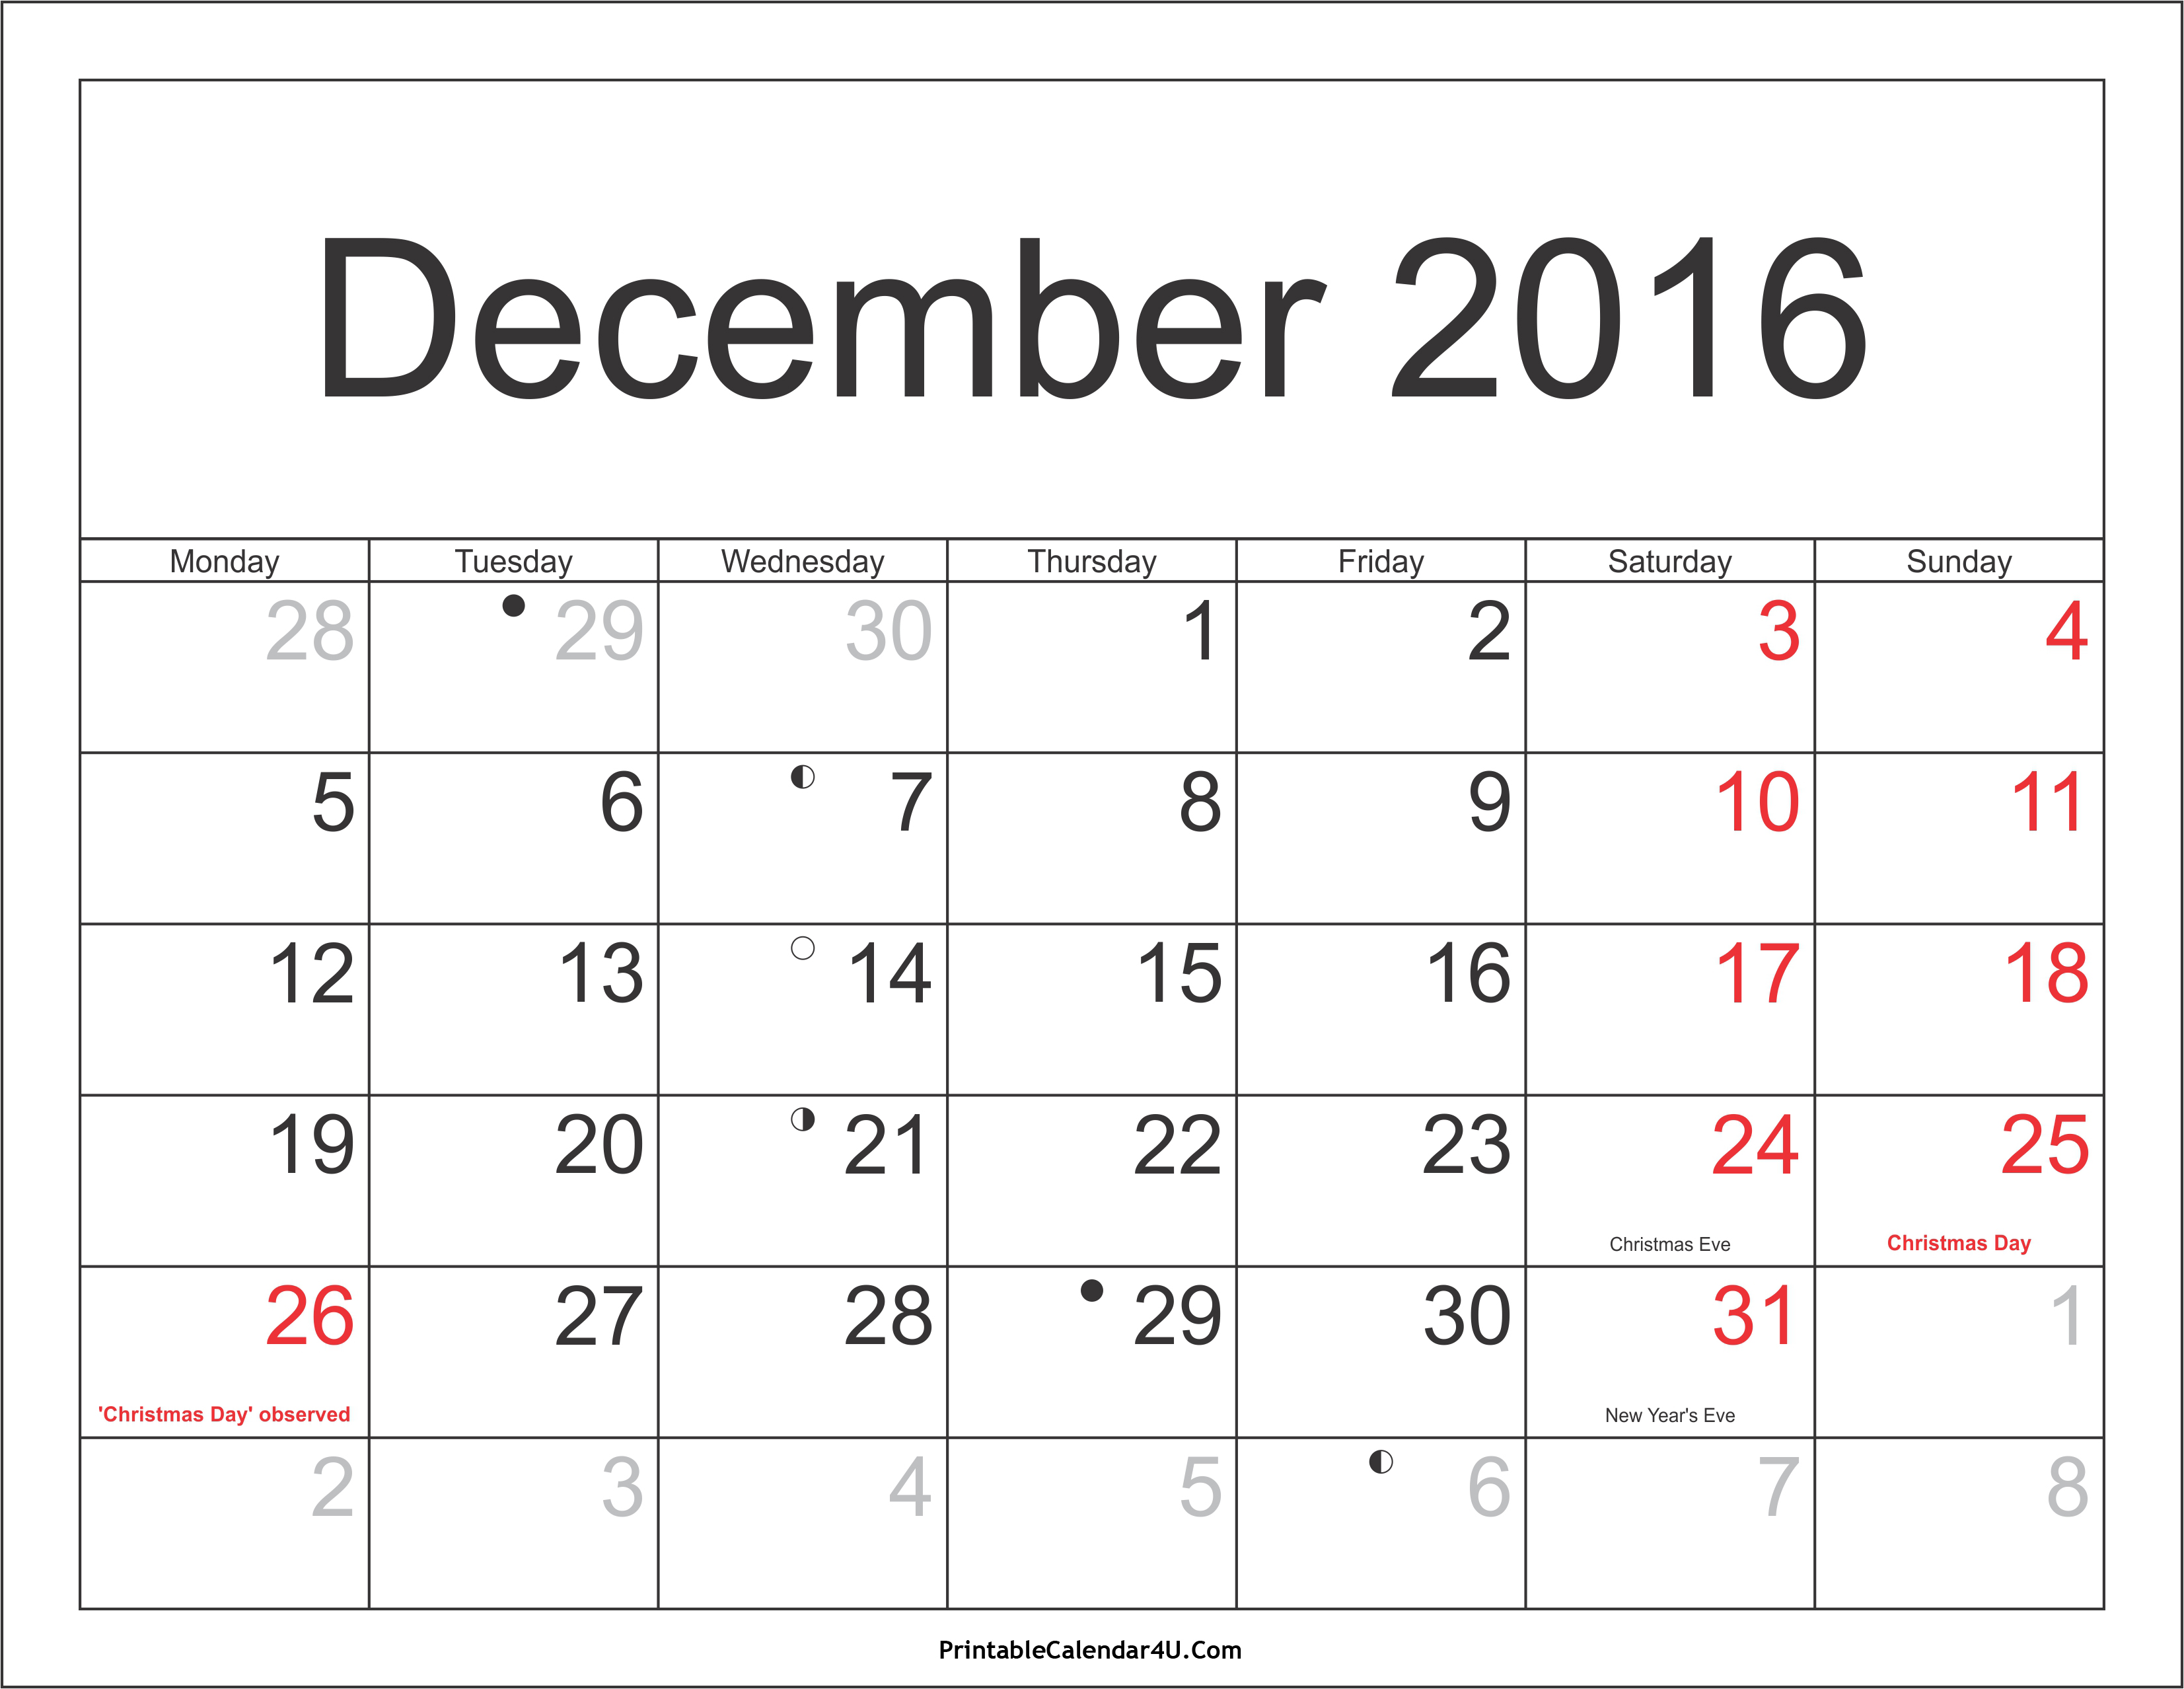 December 2016 Calendar Printable with Holidays PDF and 